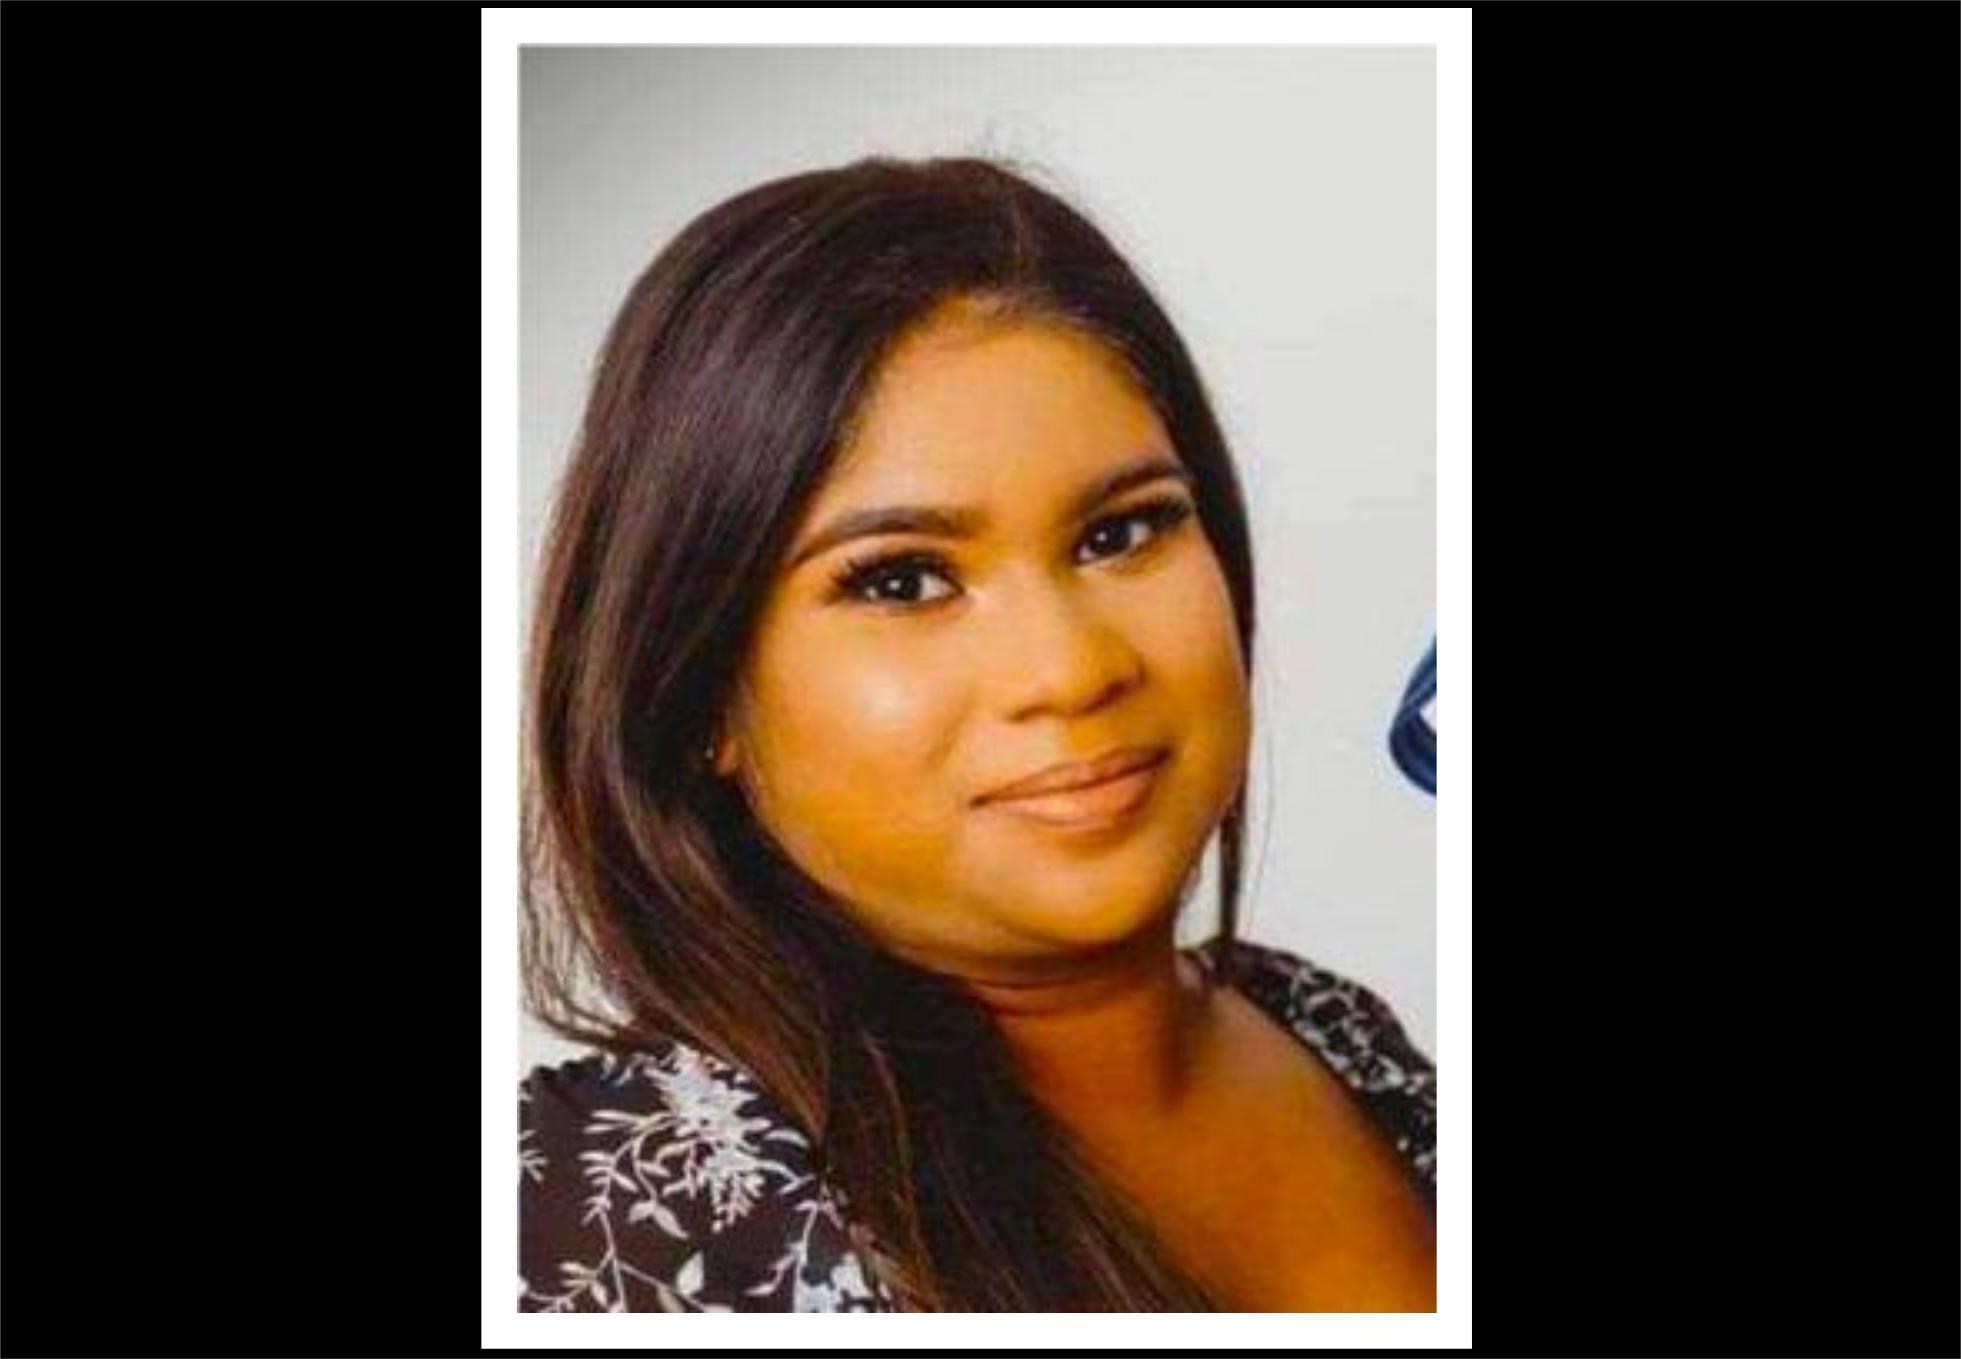 Vallance Rambarat: Ransom was made for the safe return of Anisha Hosein